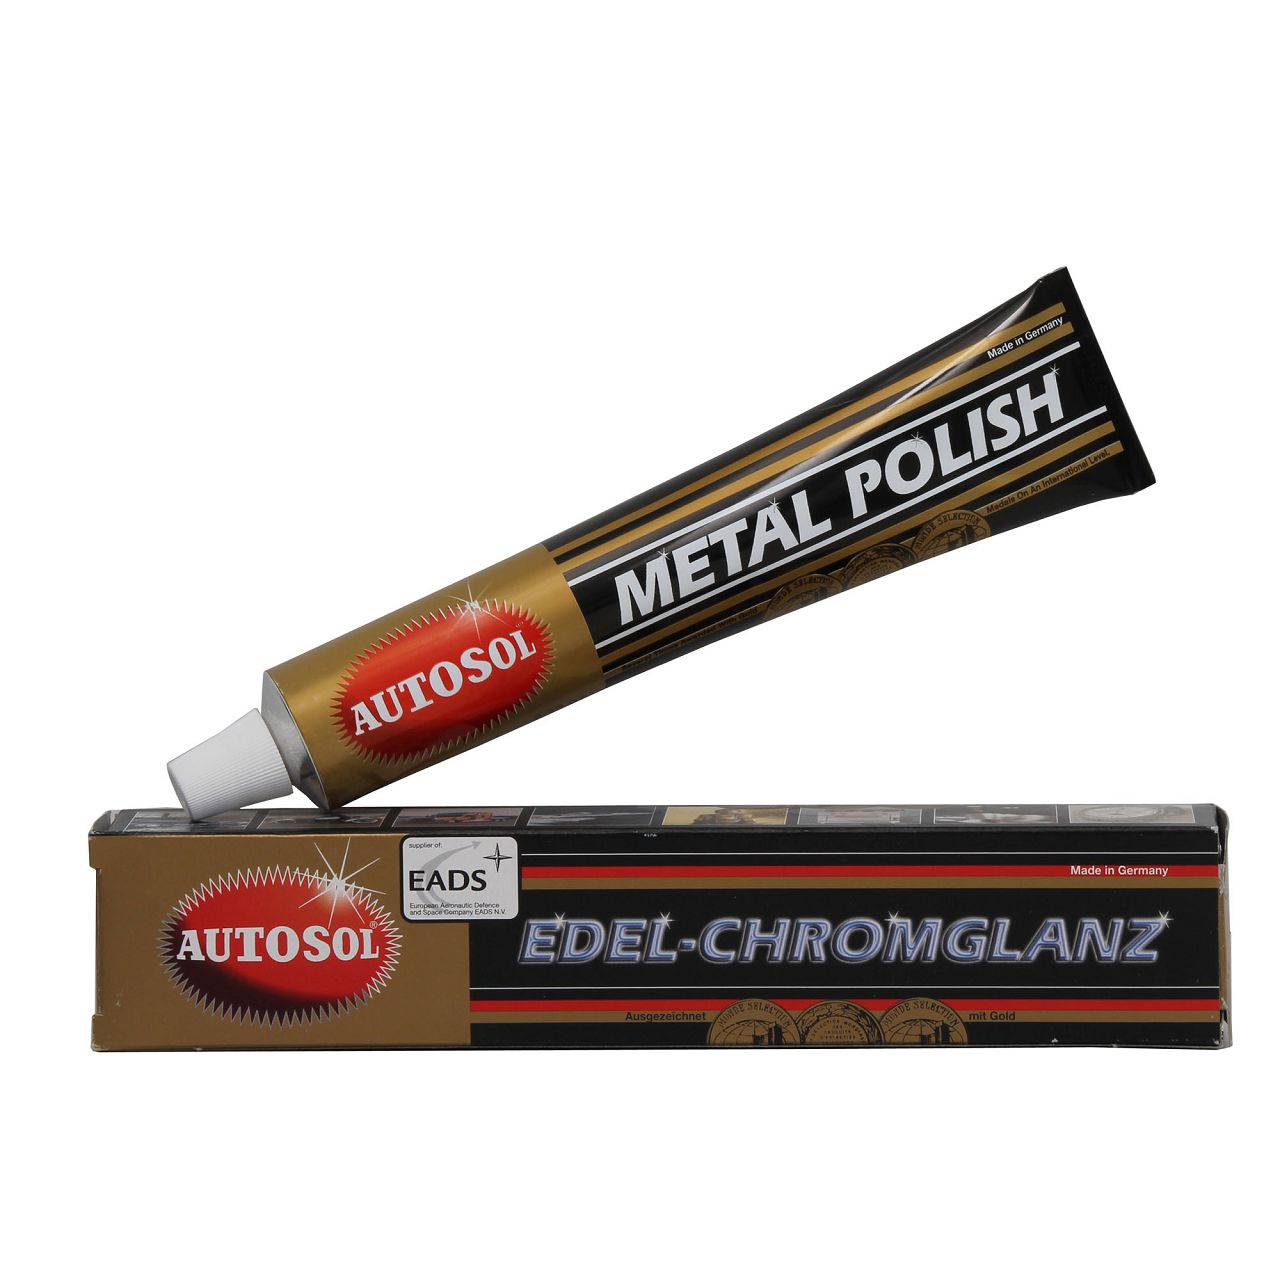 AUTOSOL Metal Polish Alu Metall Chrom Politur Polierpaste EDEL Chromglanz 75ML